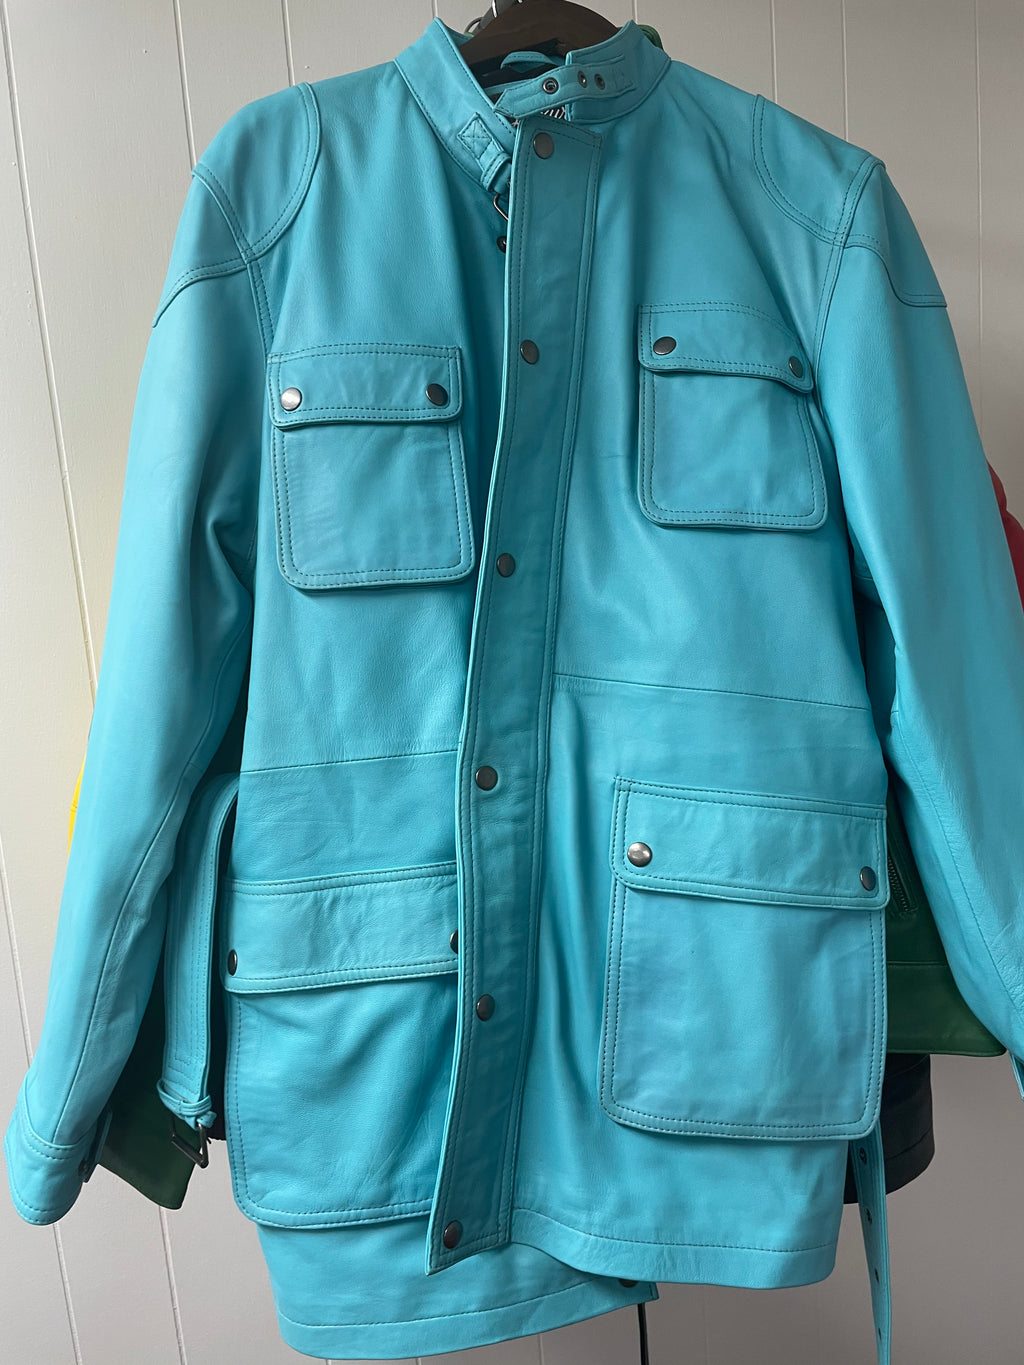 Leisure jackets size medium